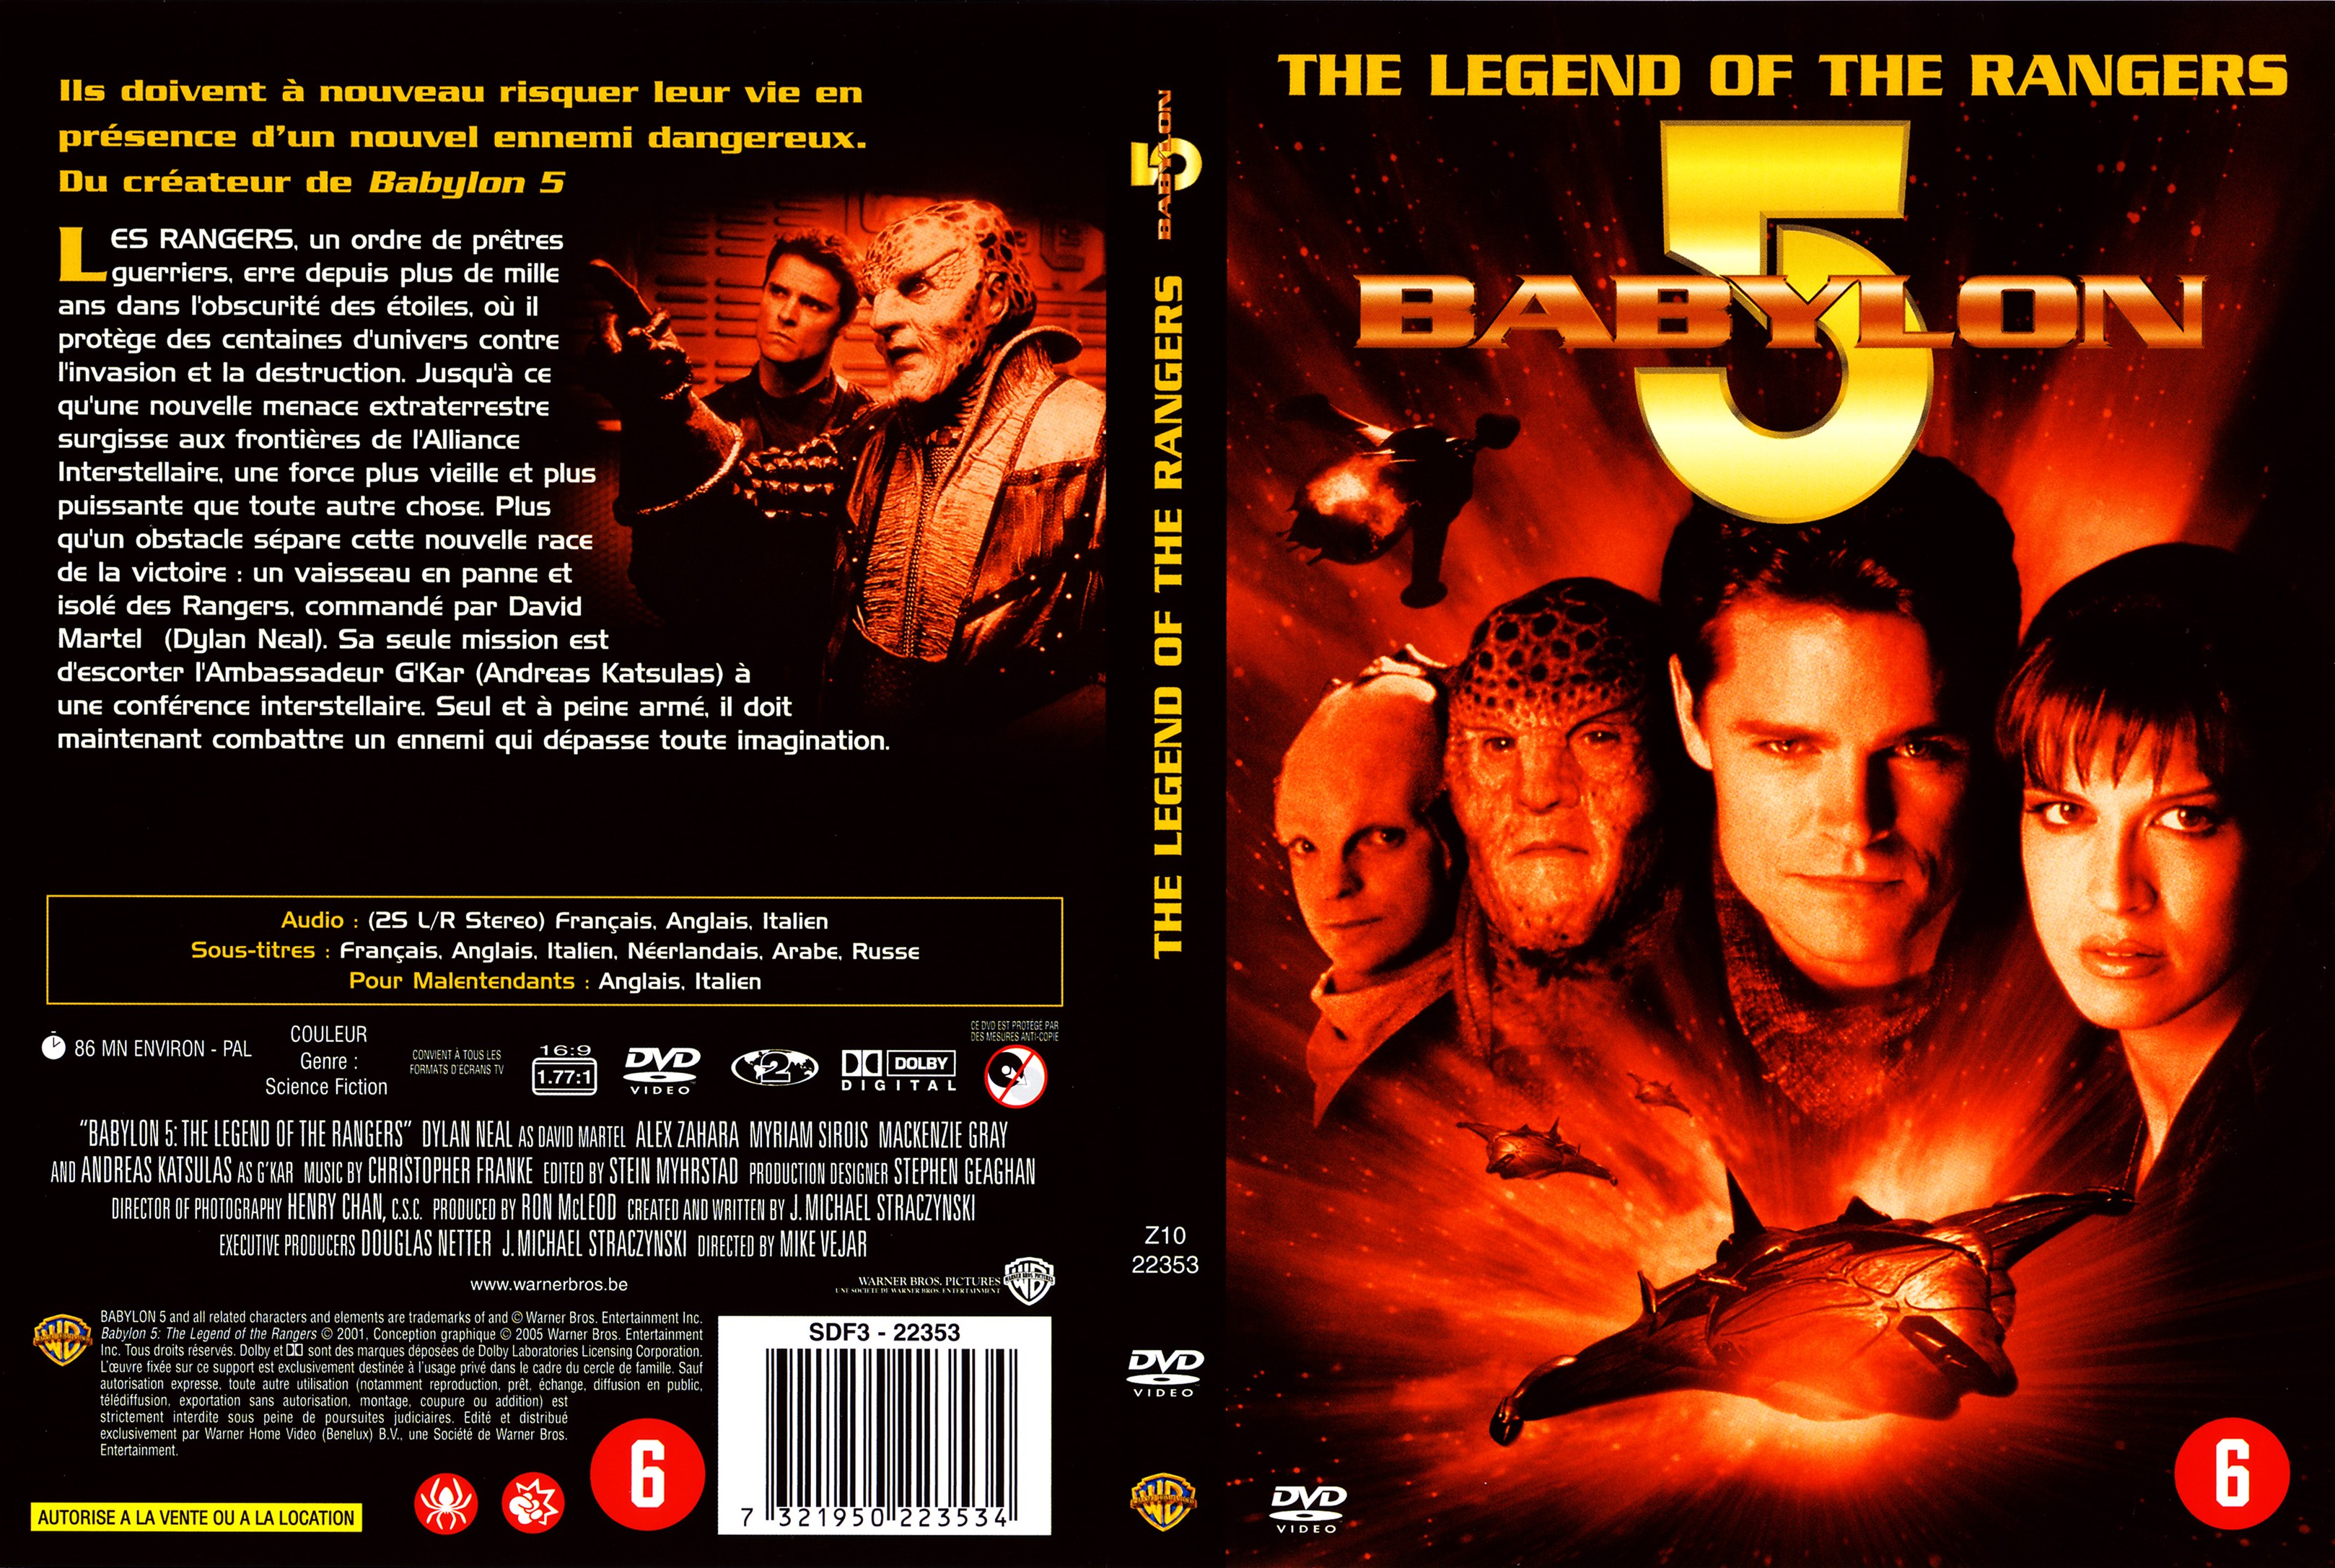 Jaquette DVD Babylon 5 The legend of the rangers